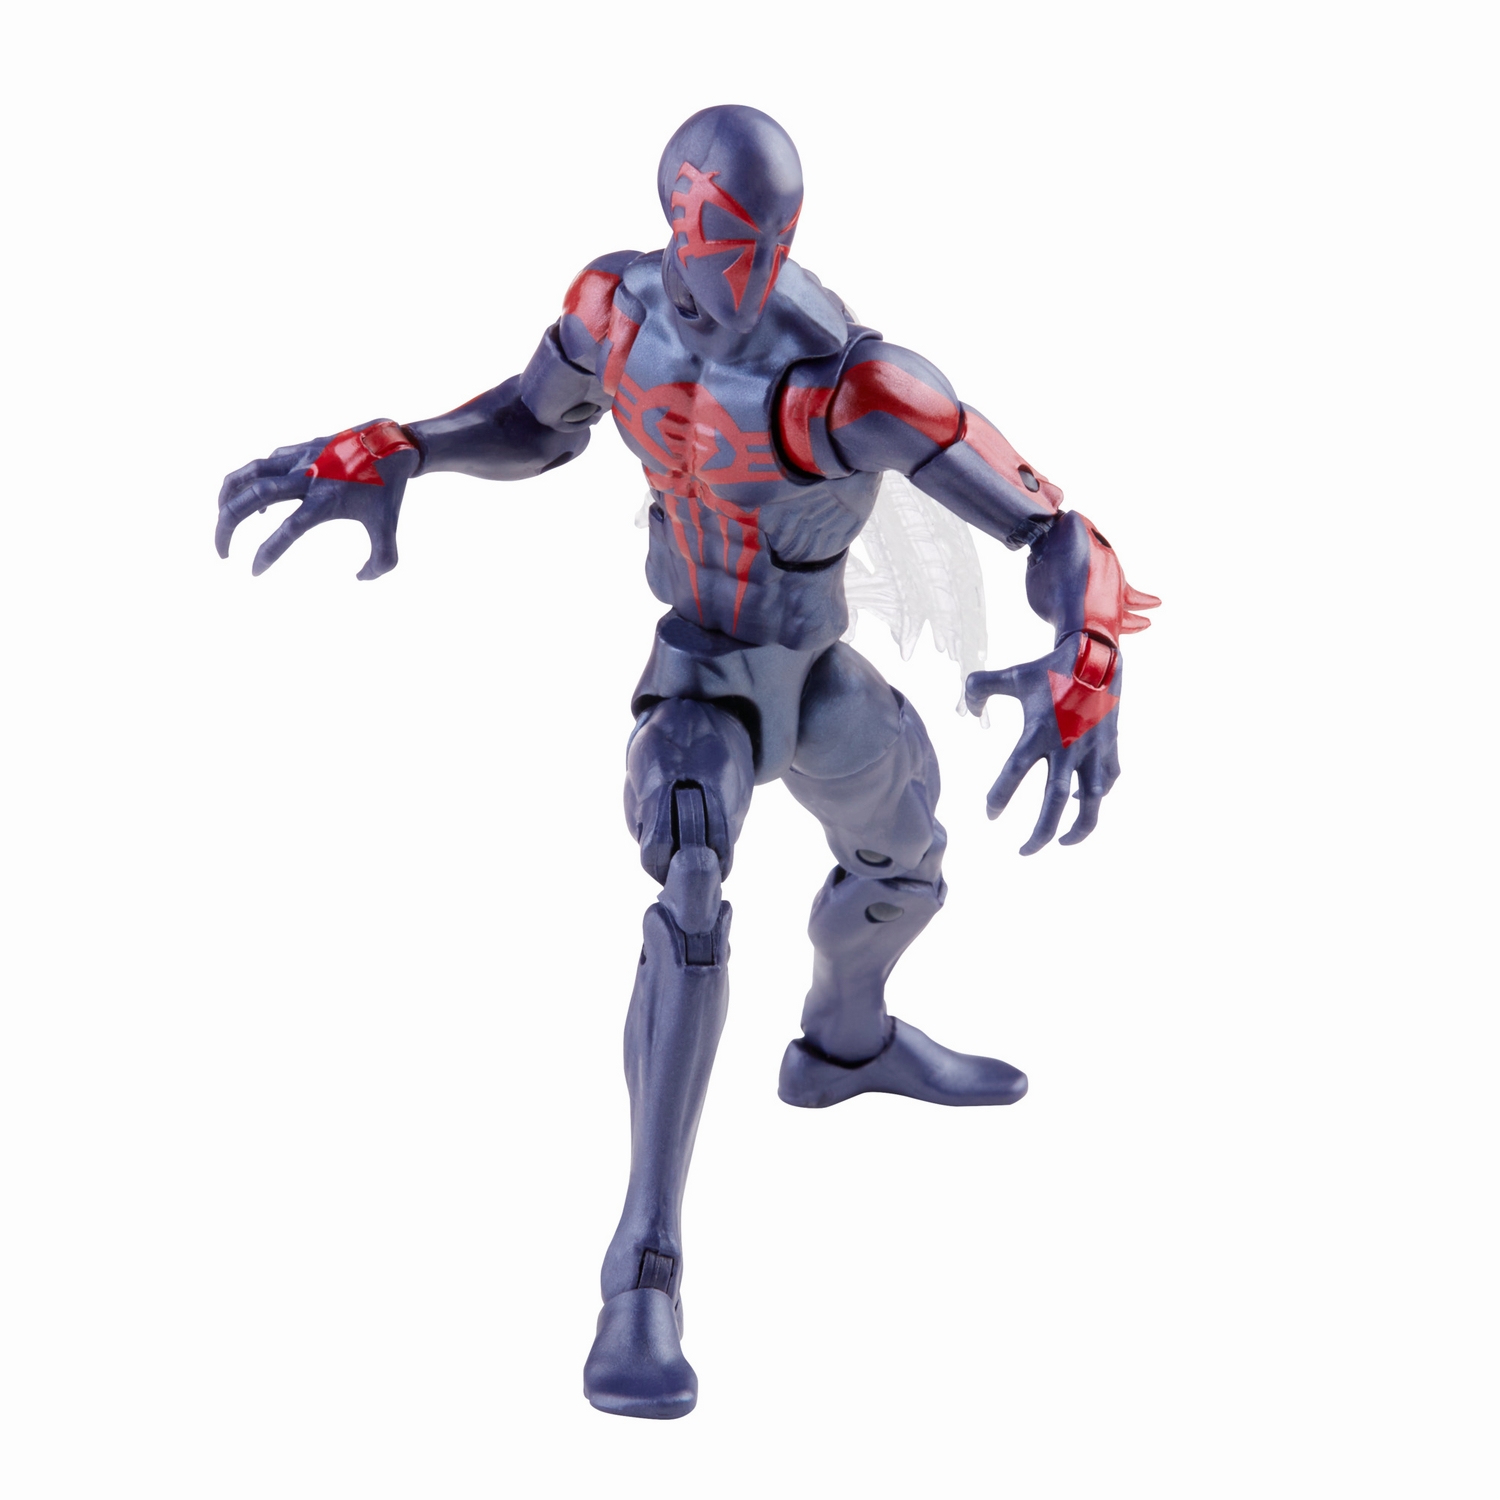 MARVEL LEGENDS SERIES 6-INCH SPIDER-MAN 2099 Figure - oop (7).jpg